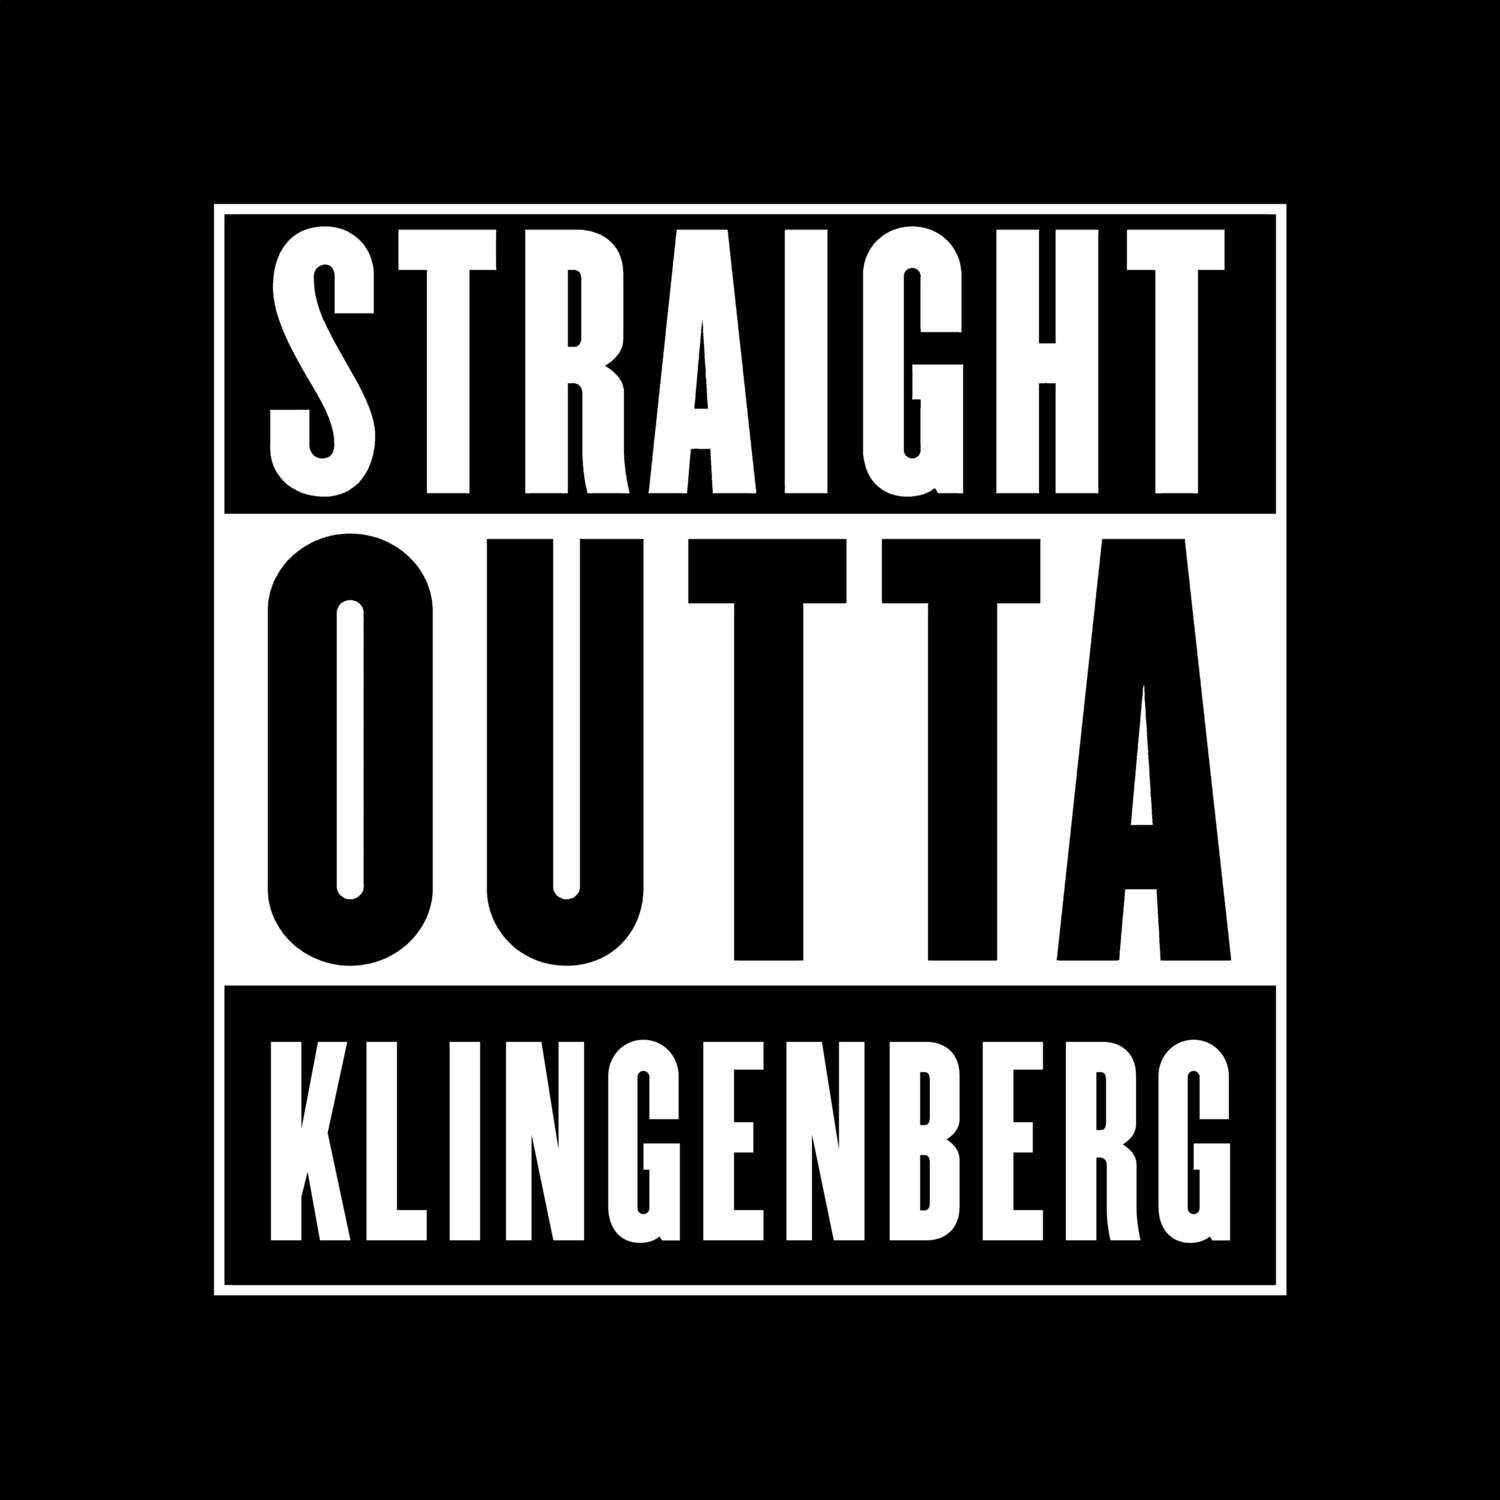 Klingenberg T-Shirt »Straight Outta«